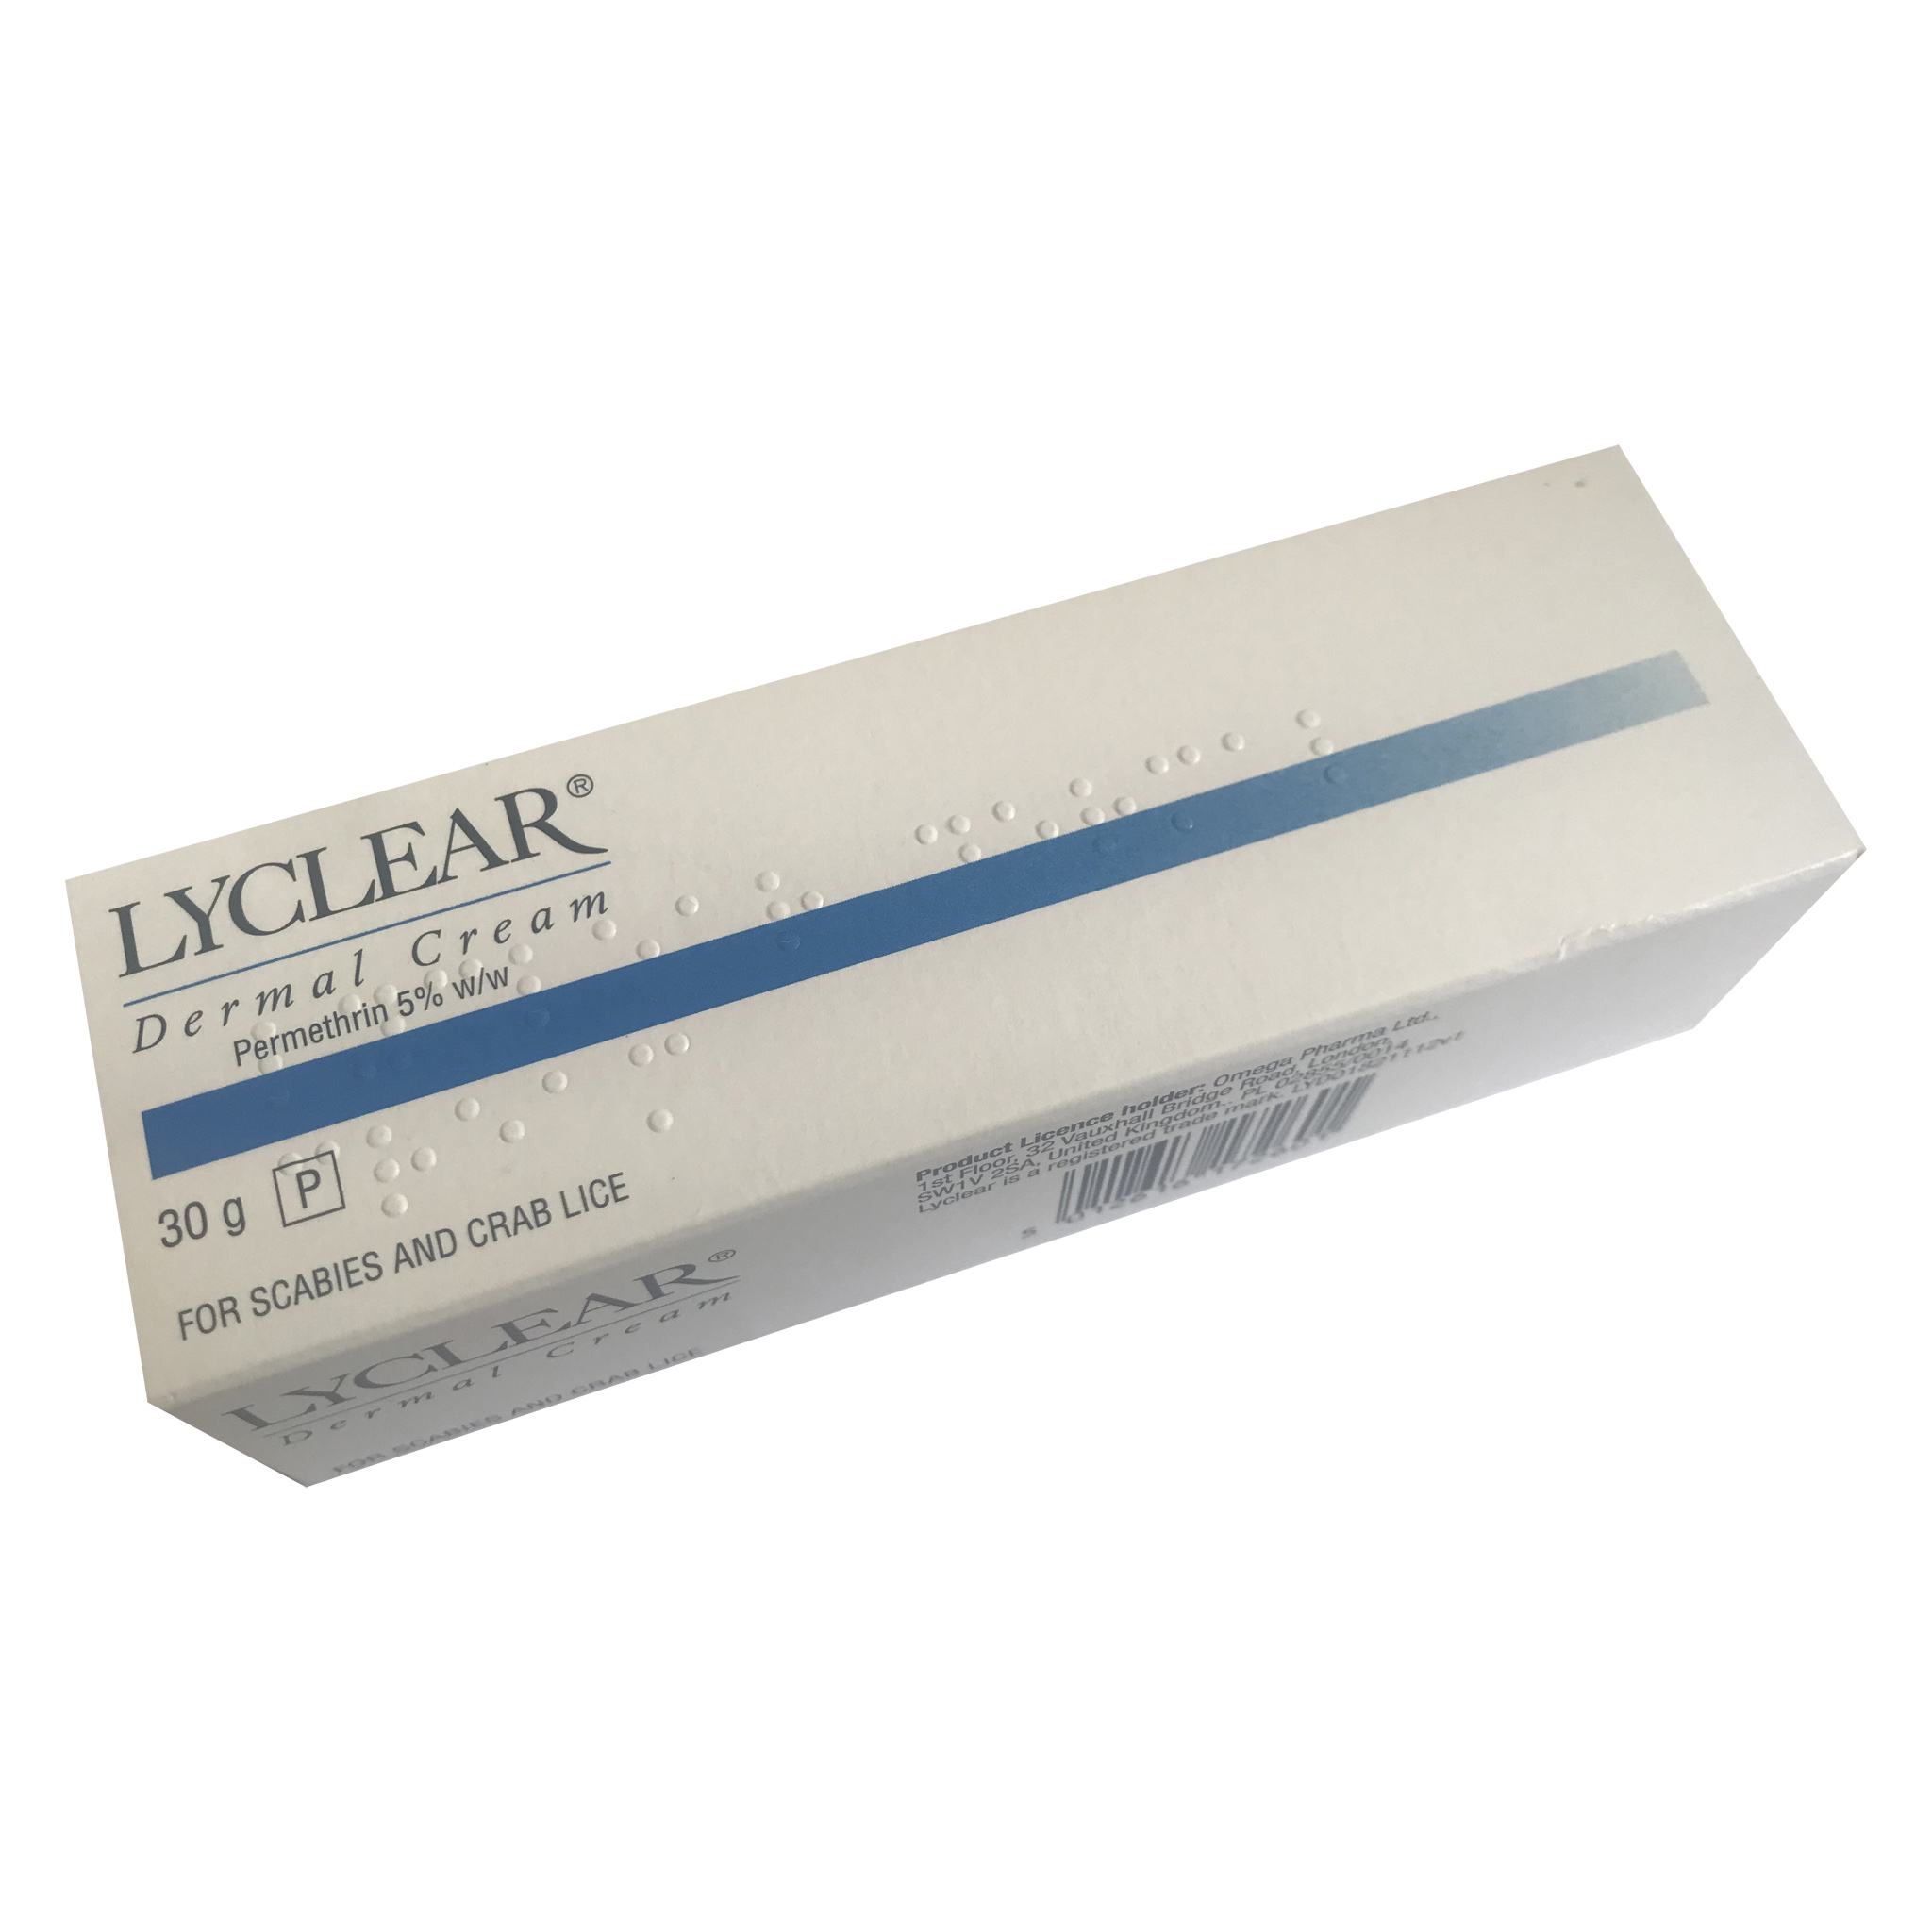 Lyclear Dermal Cream (30g) - 9 Packs